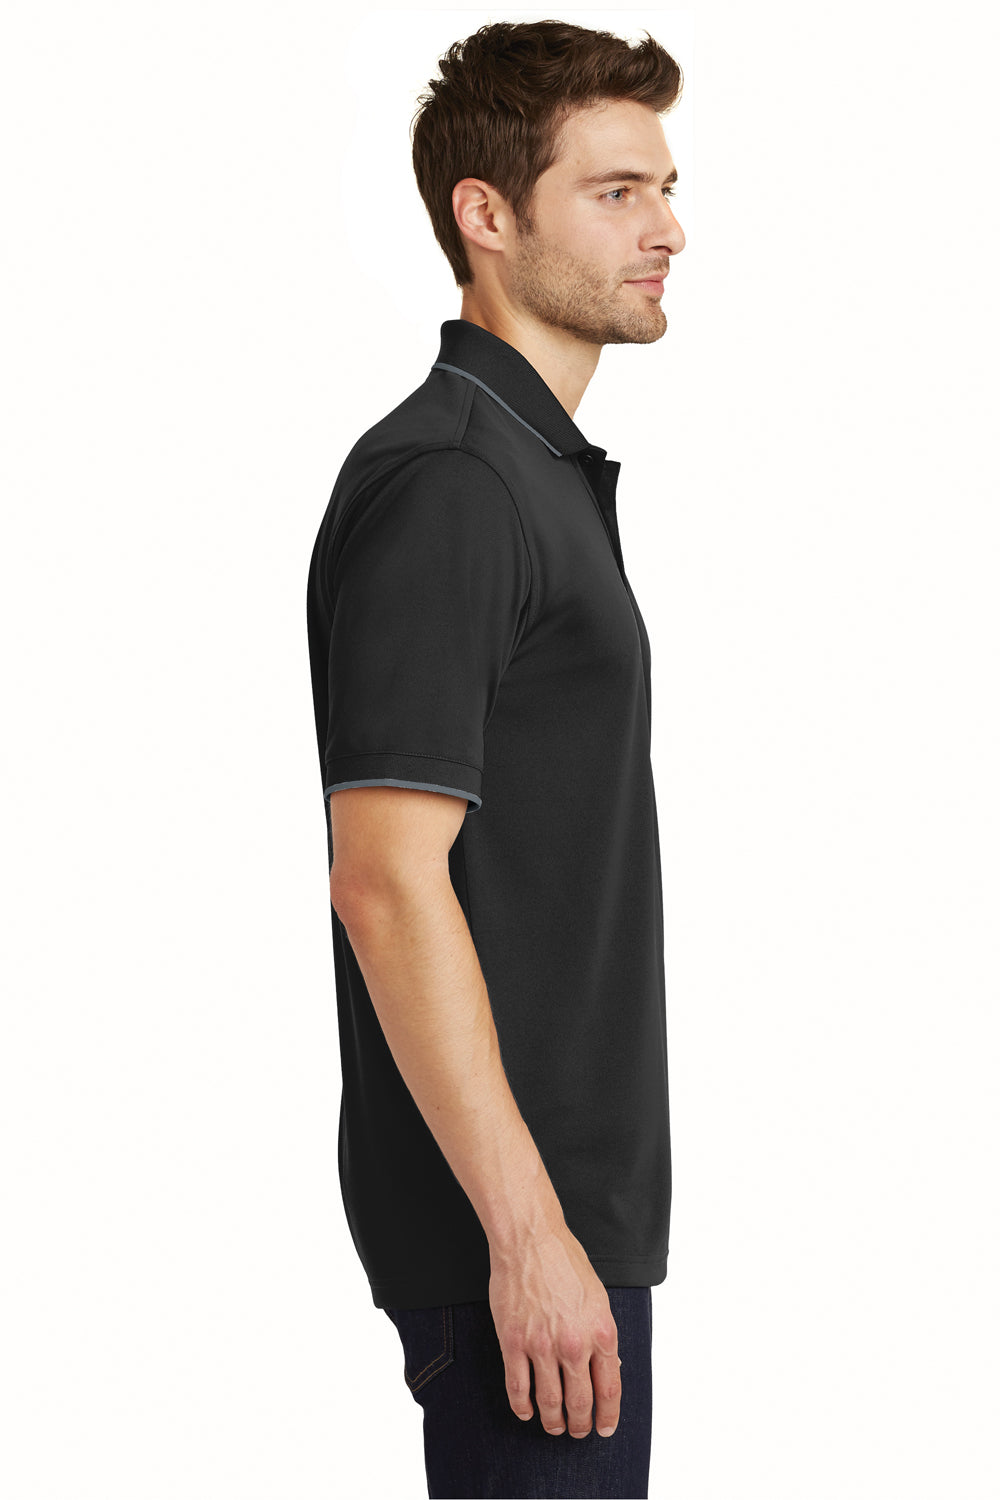 Port Authority K111 Mens Dry Zone Moisture Wicking Short Sleeve Polo Shirt Black/Graphite Grey Side